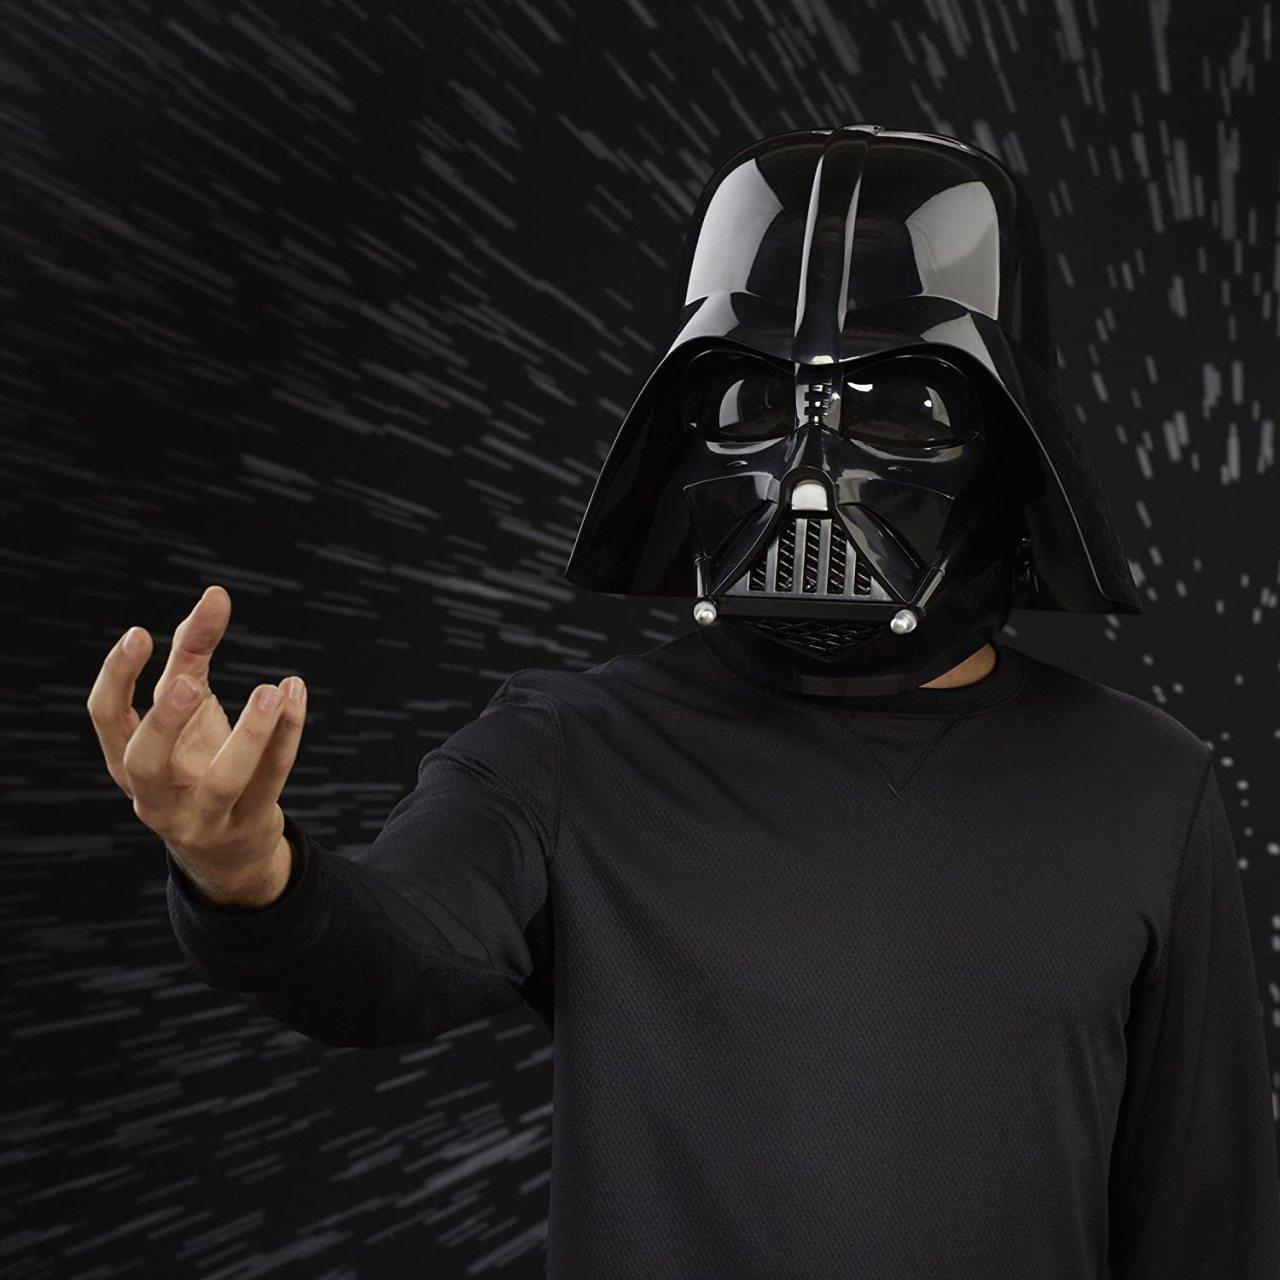 Darth Vader 1:1 Life Size Premium Electronic Helmet Replica